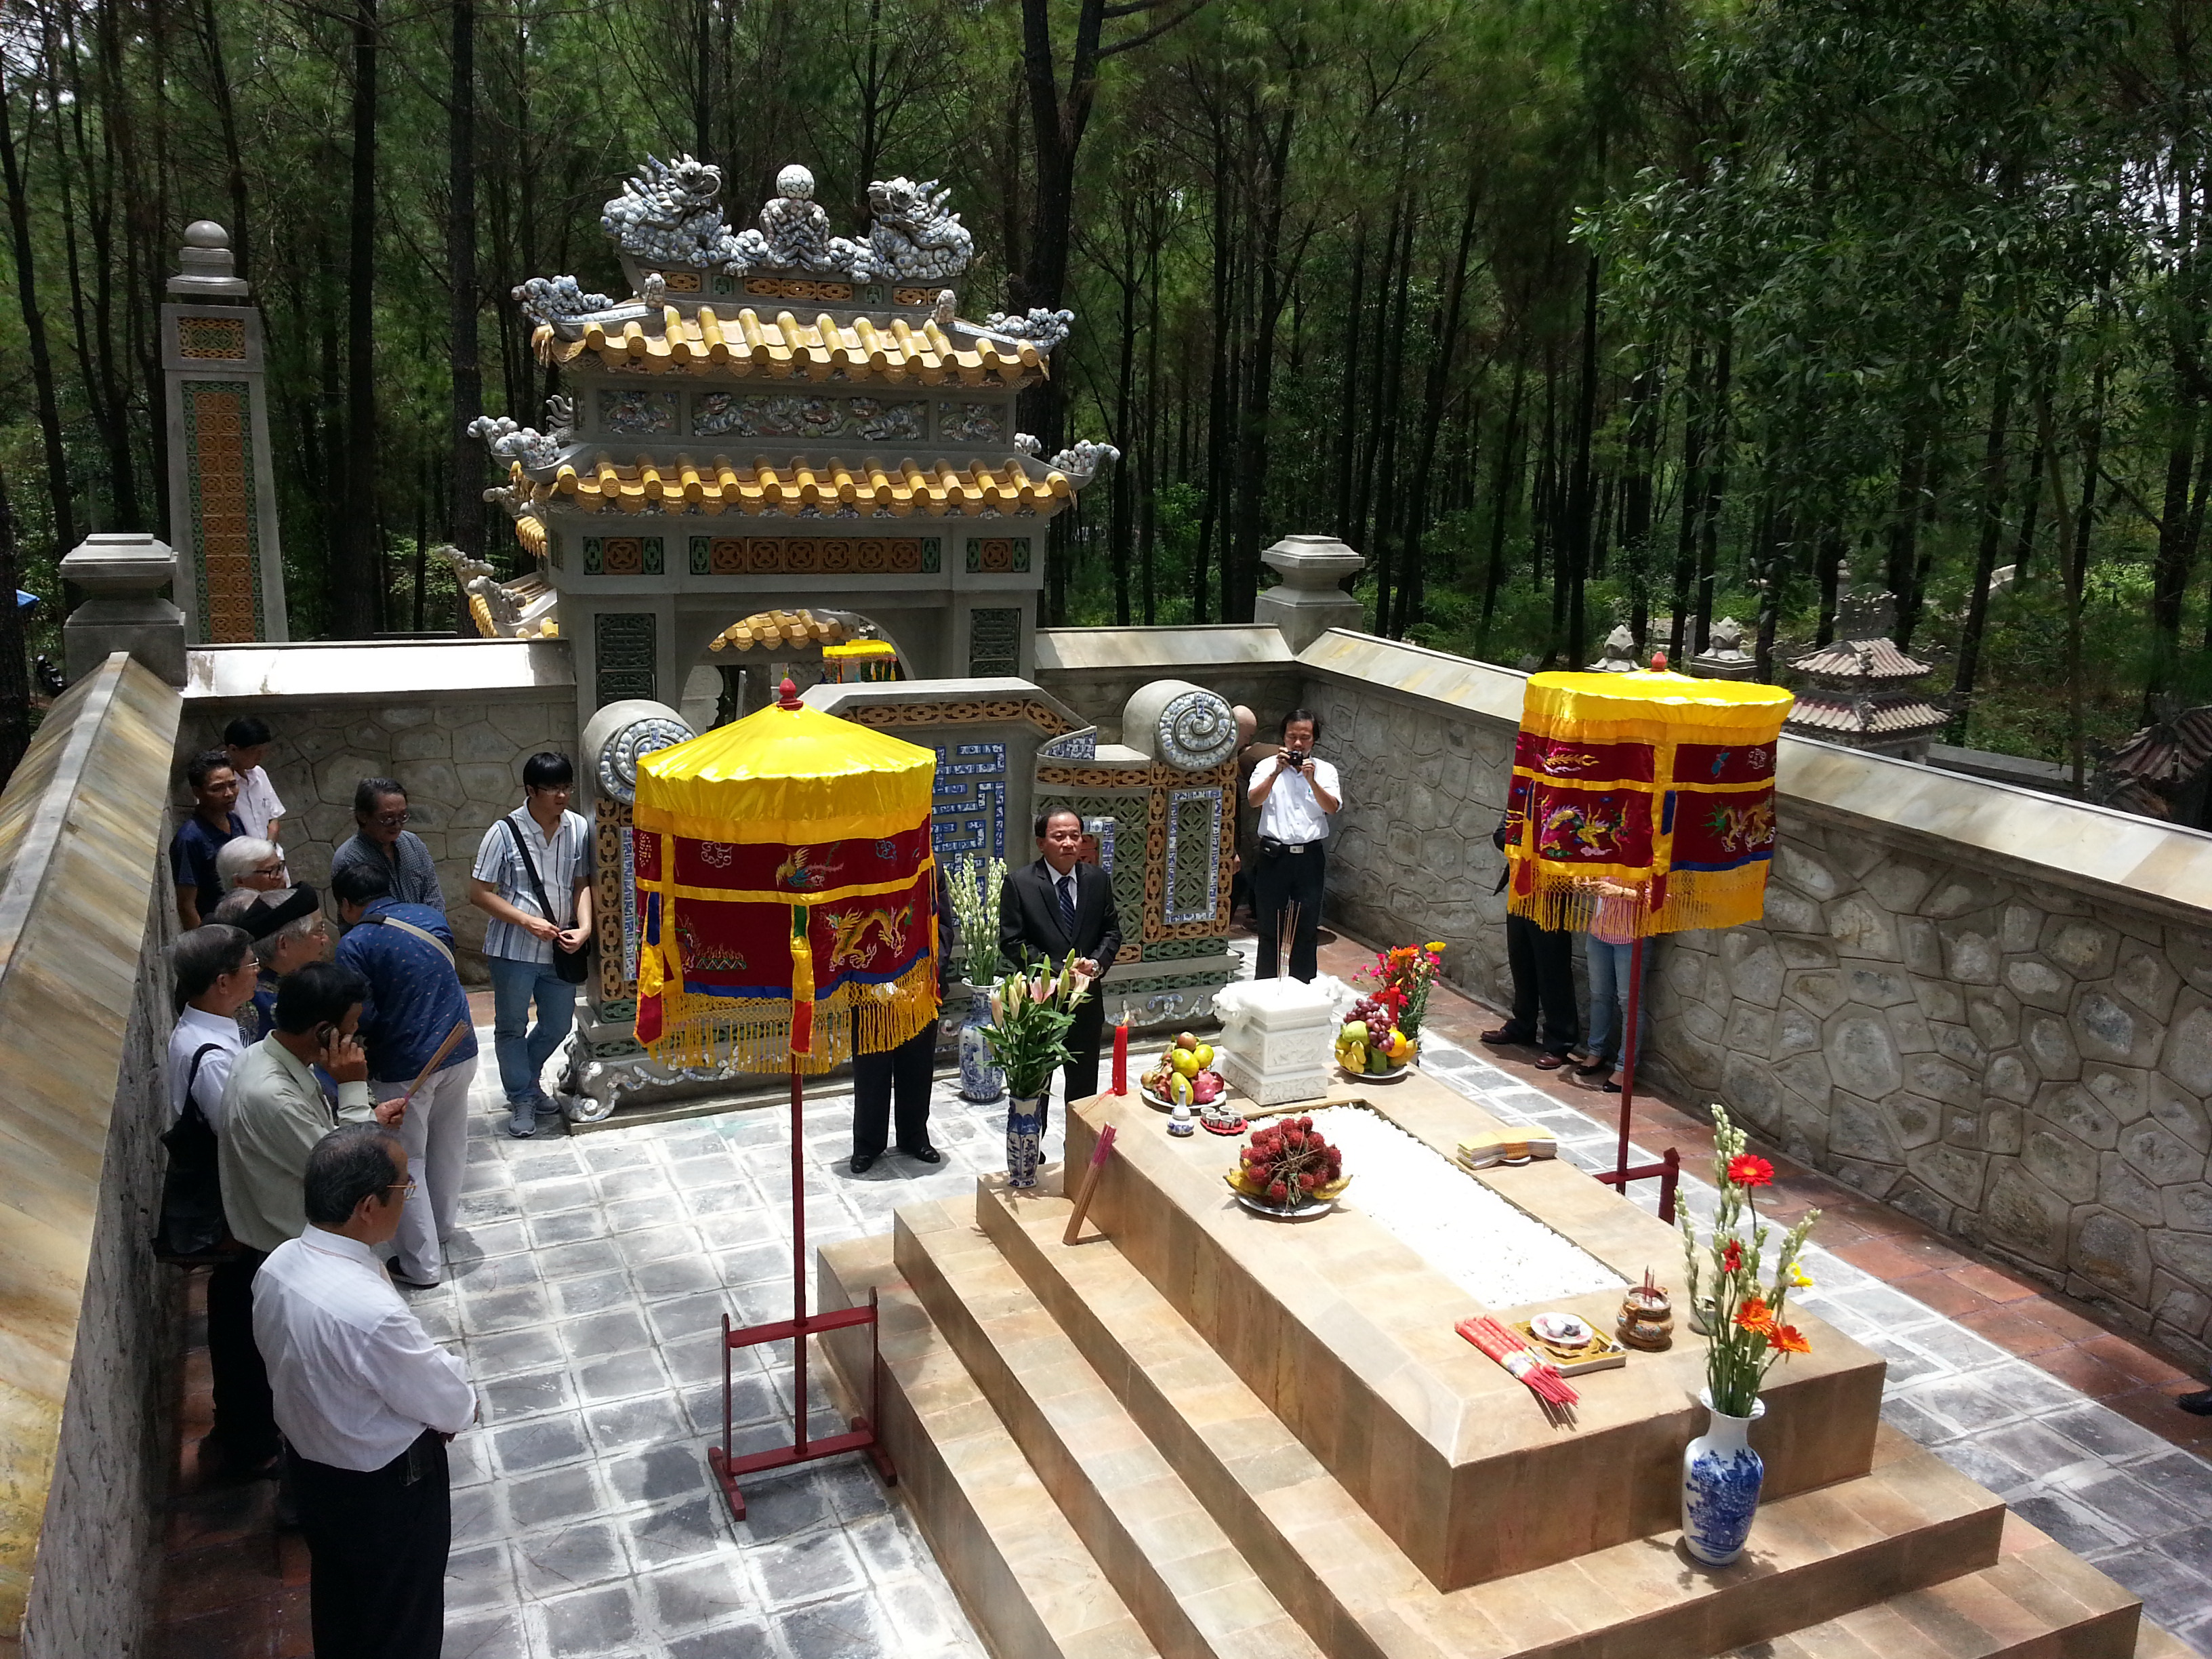 King Hiep Hoa’s mausoleum built, recognition urged